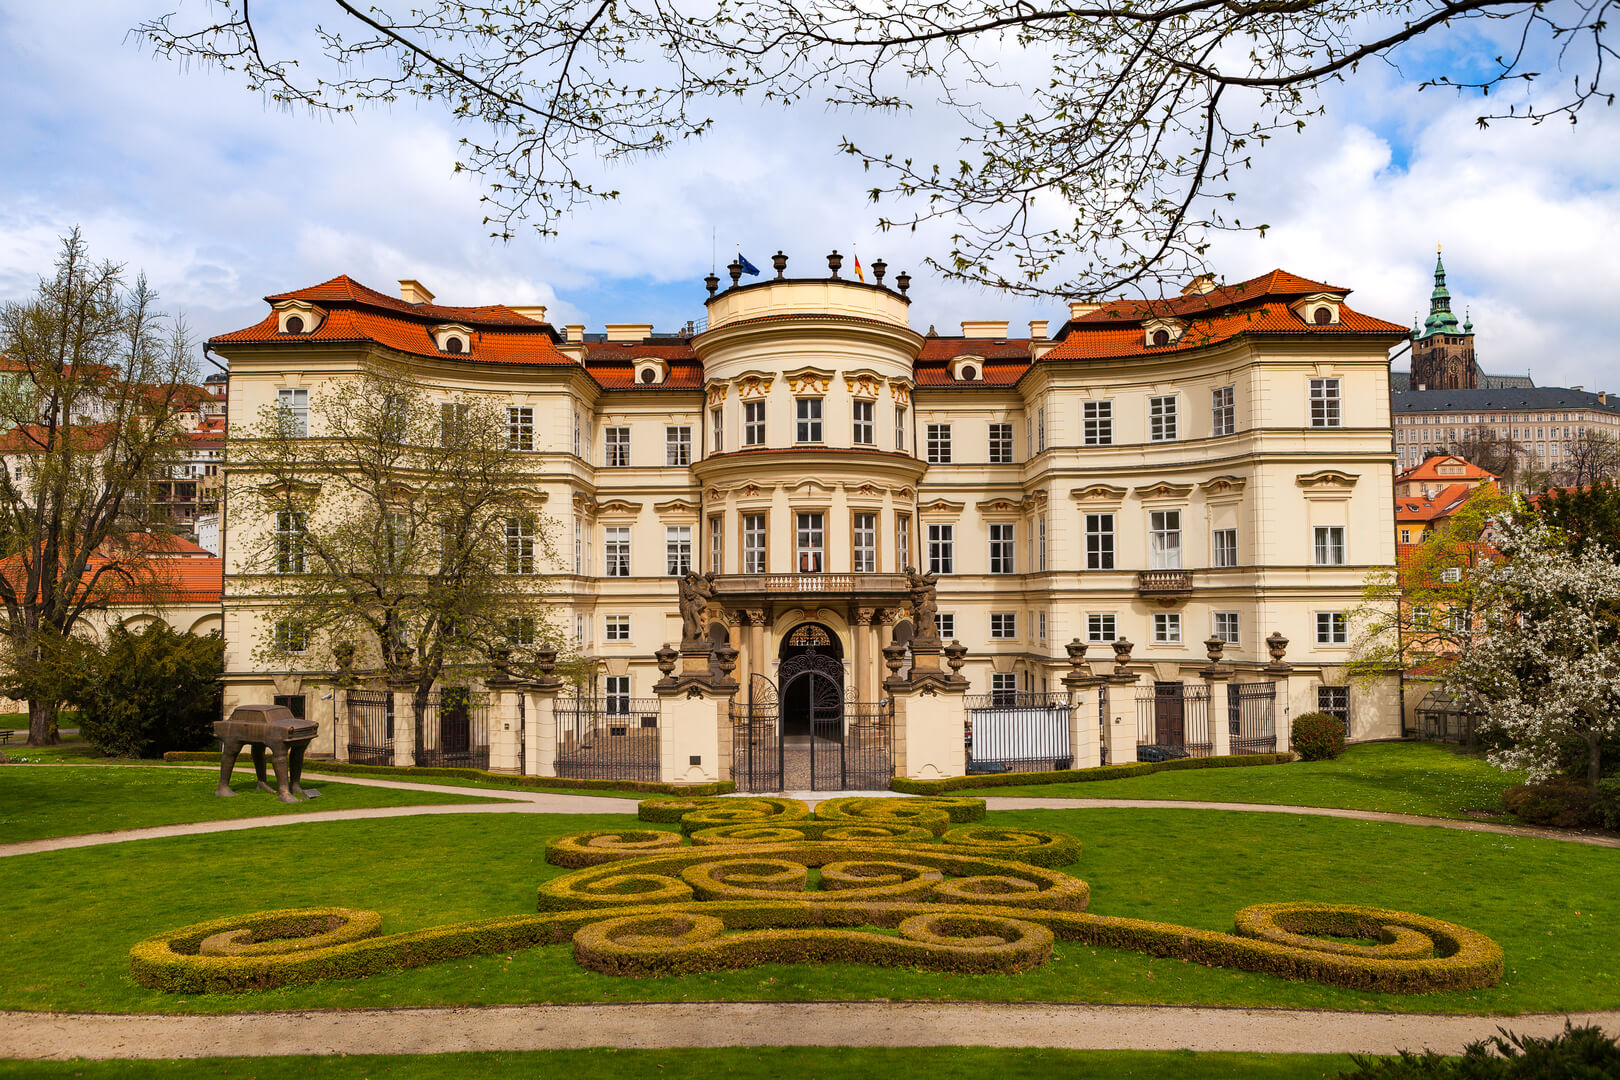 Lobkowicz Palace and backyard with beautiful gardening. Also German embassy.